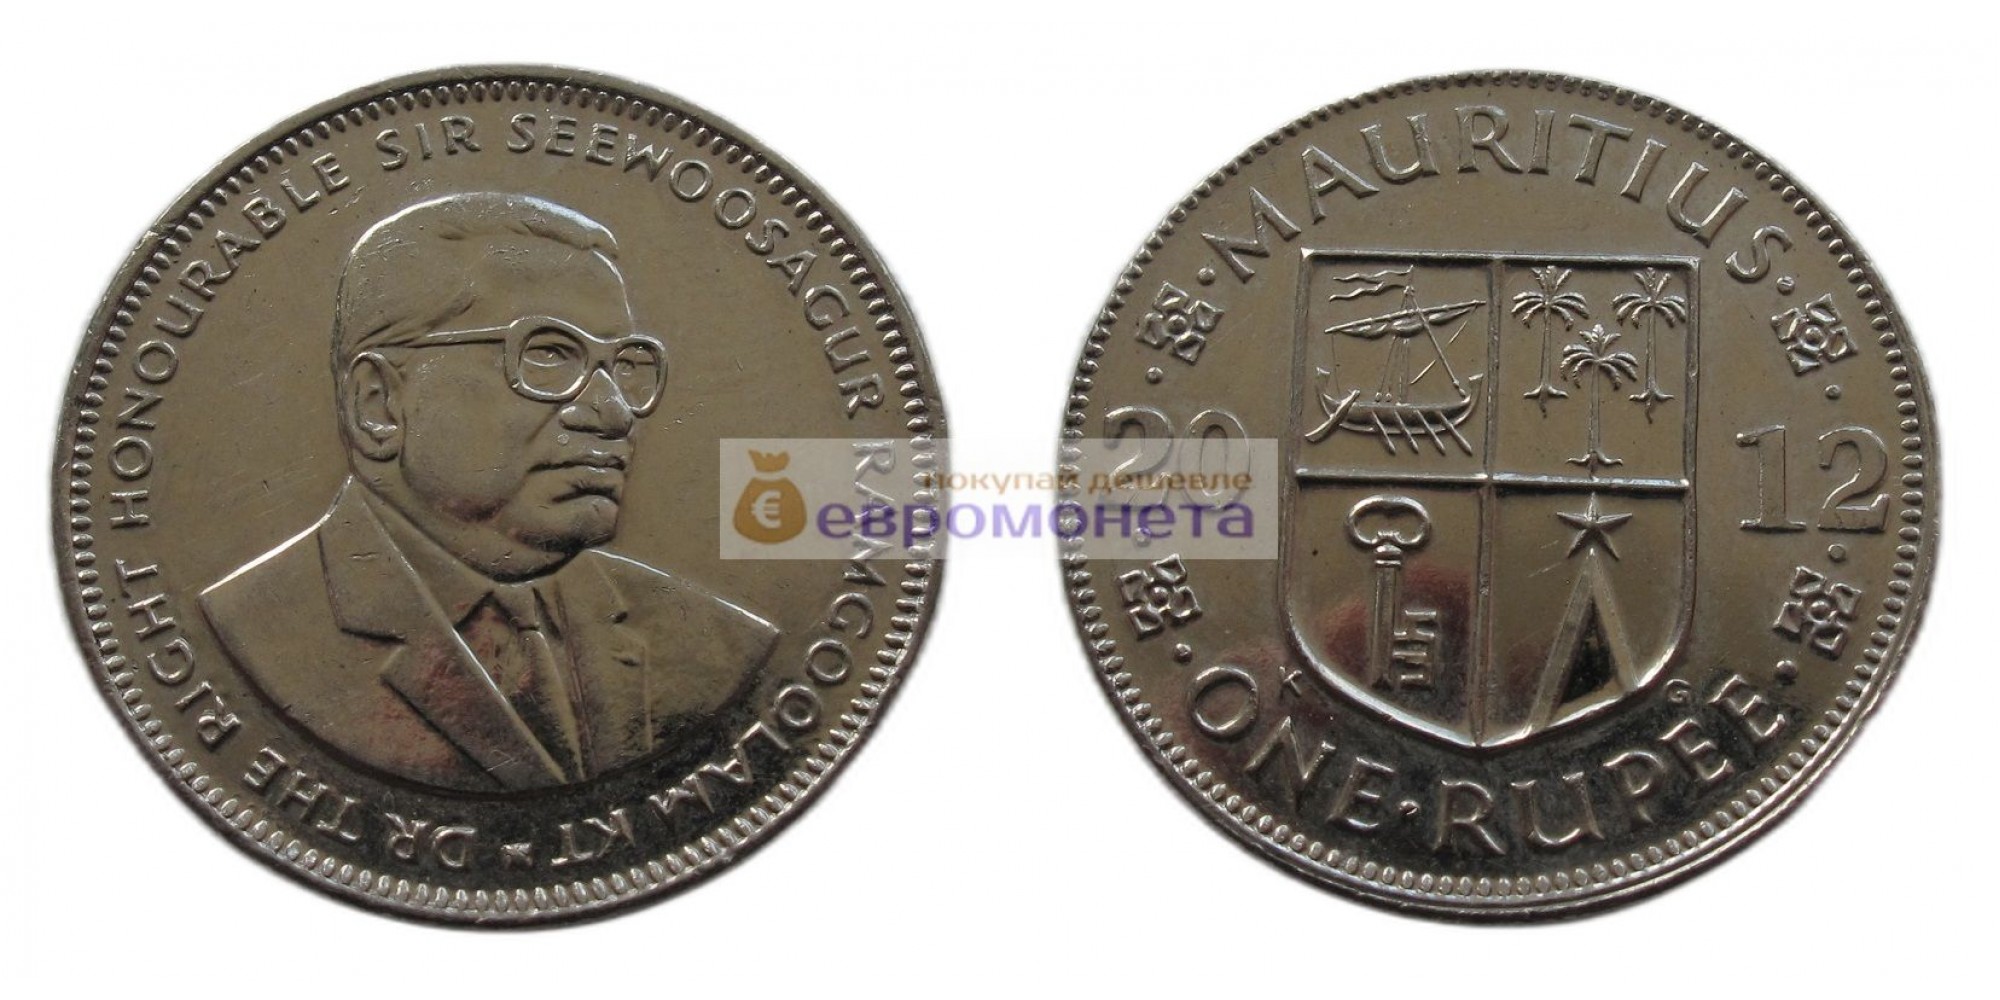 Маврикий 1 рупия 2012 год. Сивусагур Рамгулам